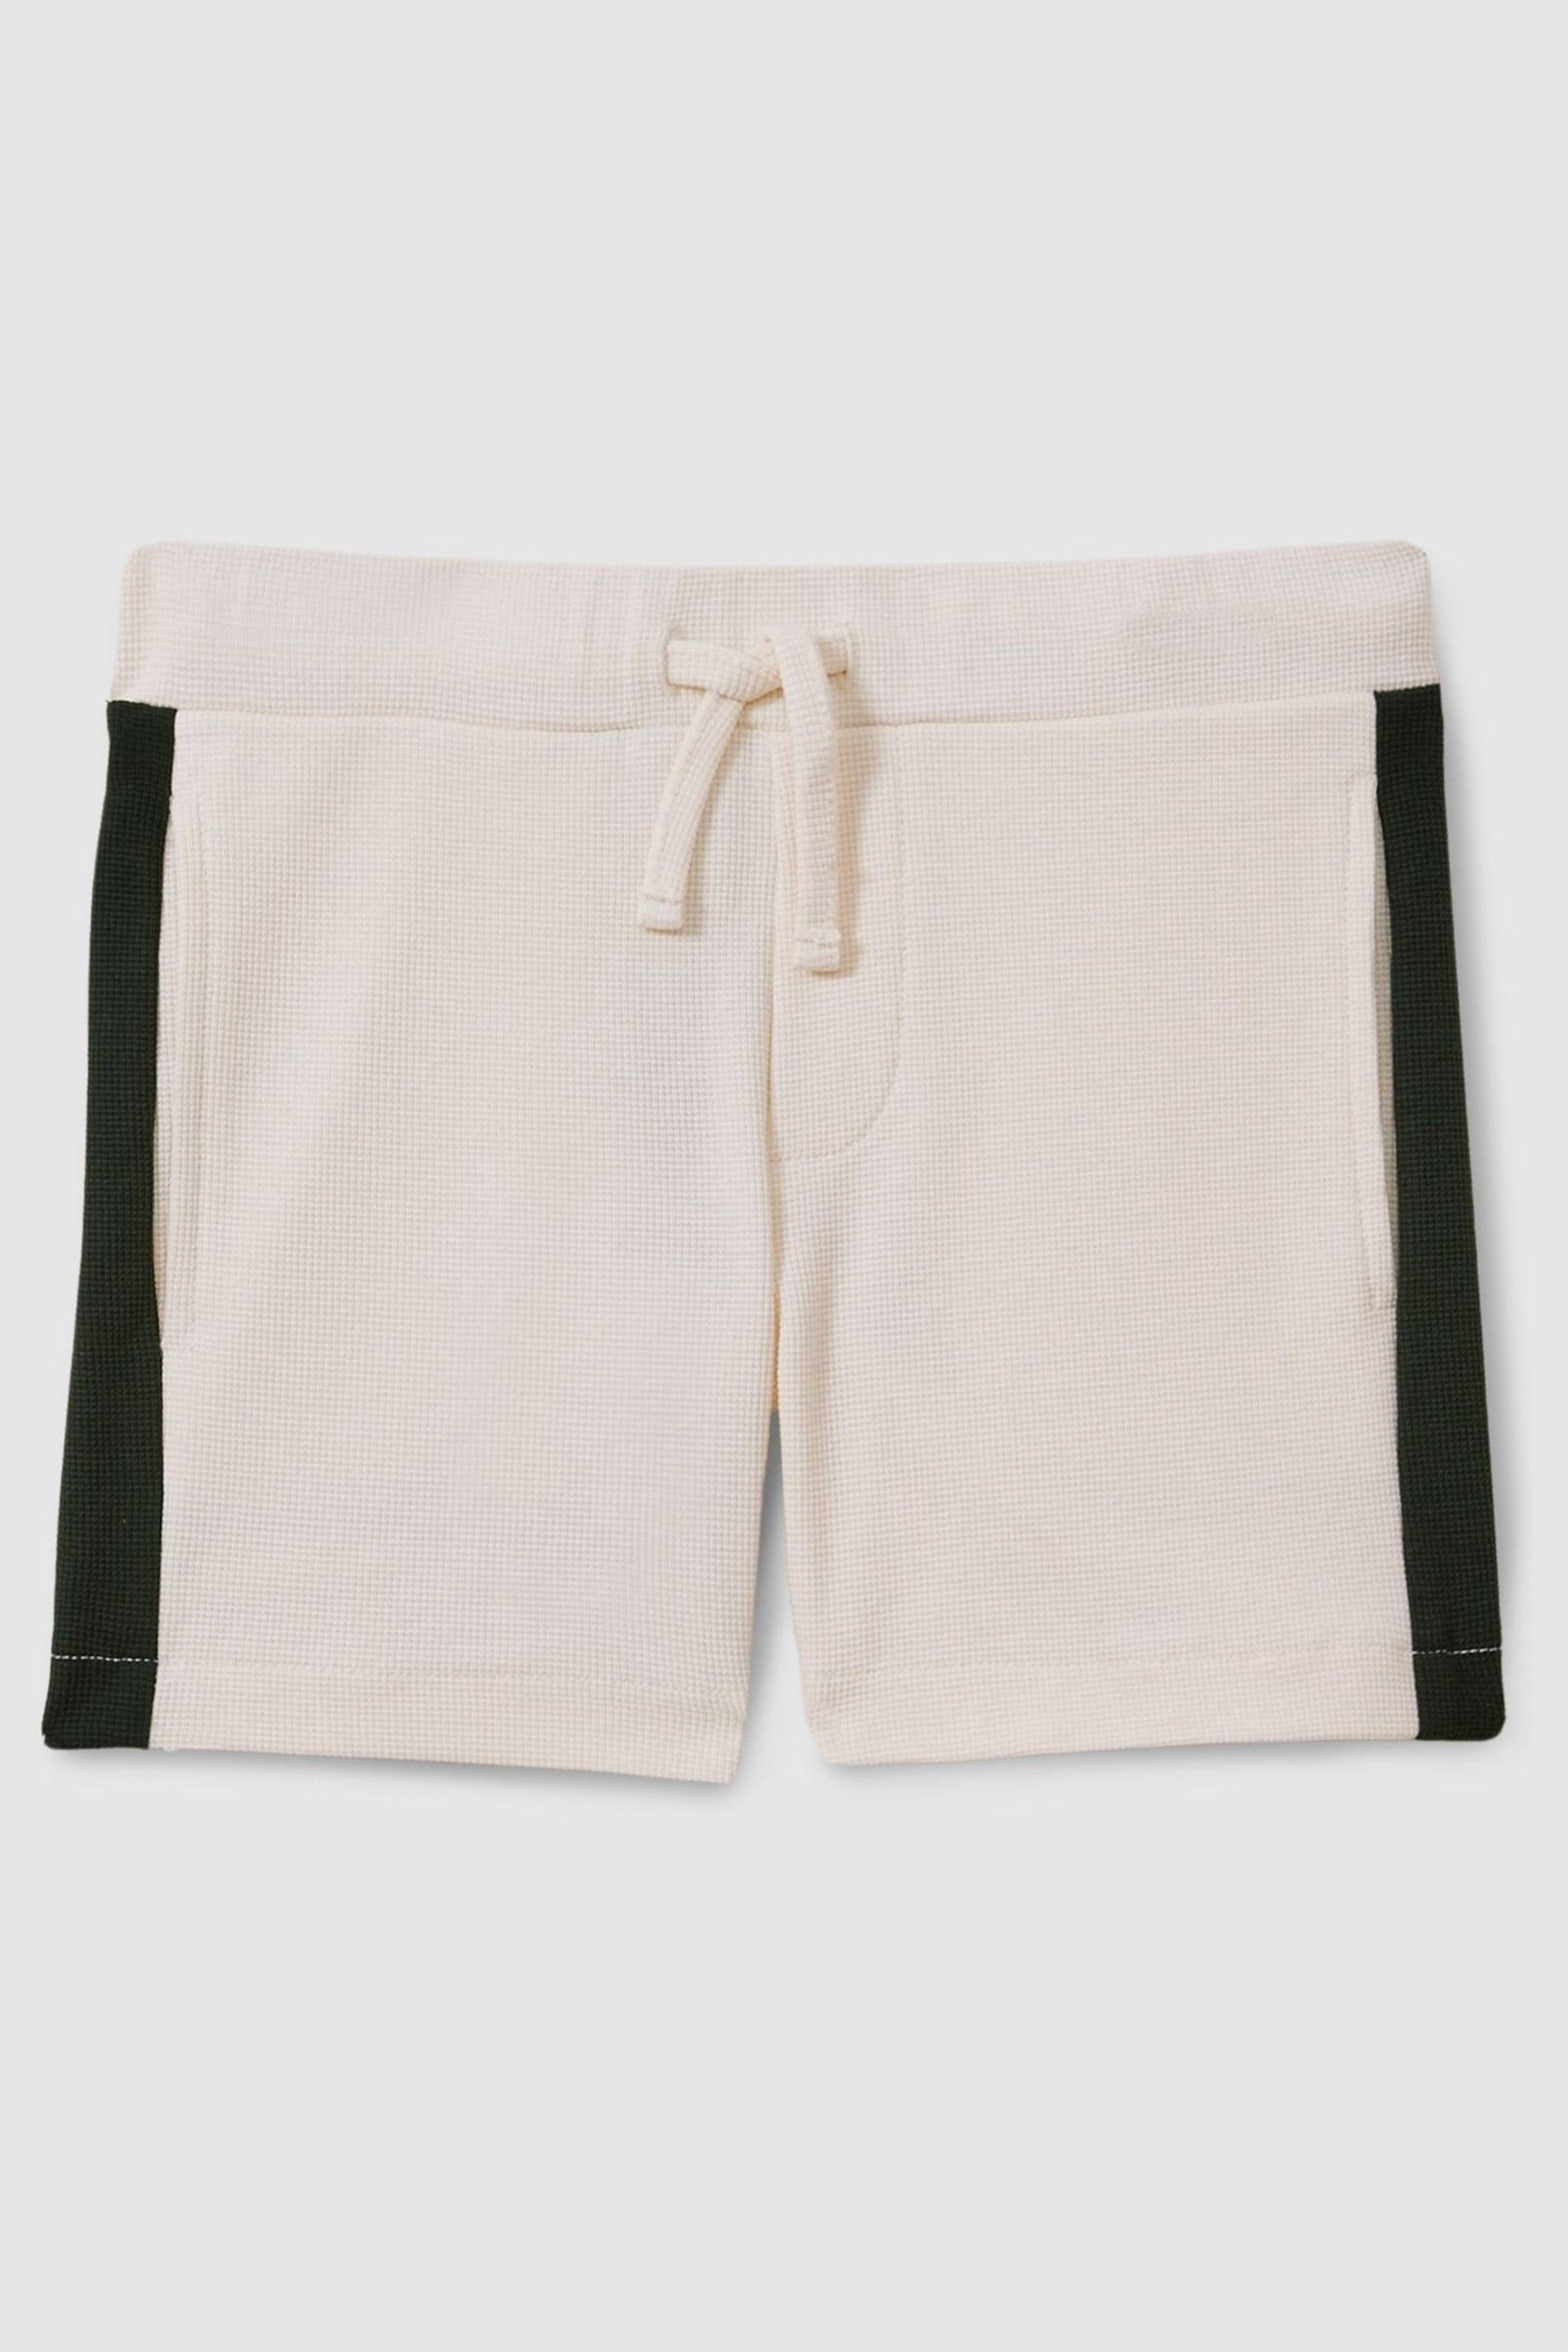 Reiss Ecru/Green Marl Junior Textured Cotton Drawstring Shorts - Image 2 of 4